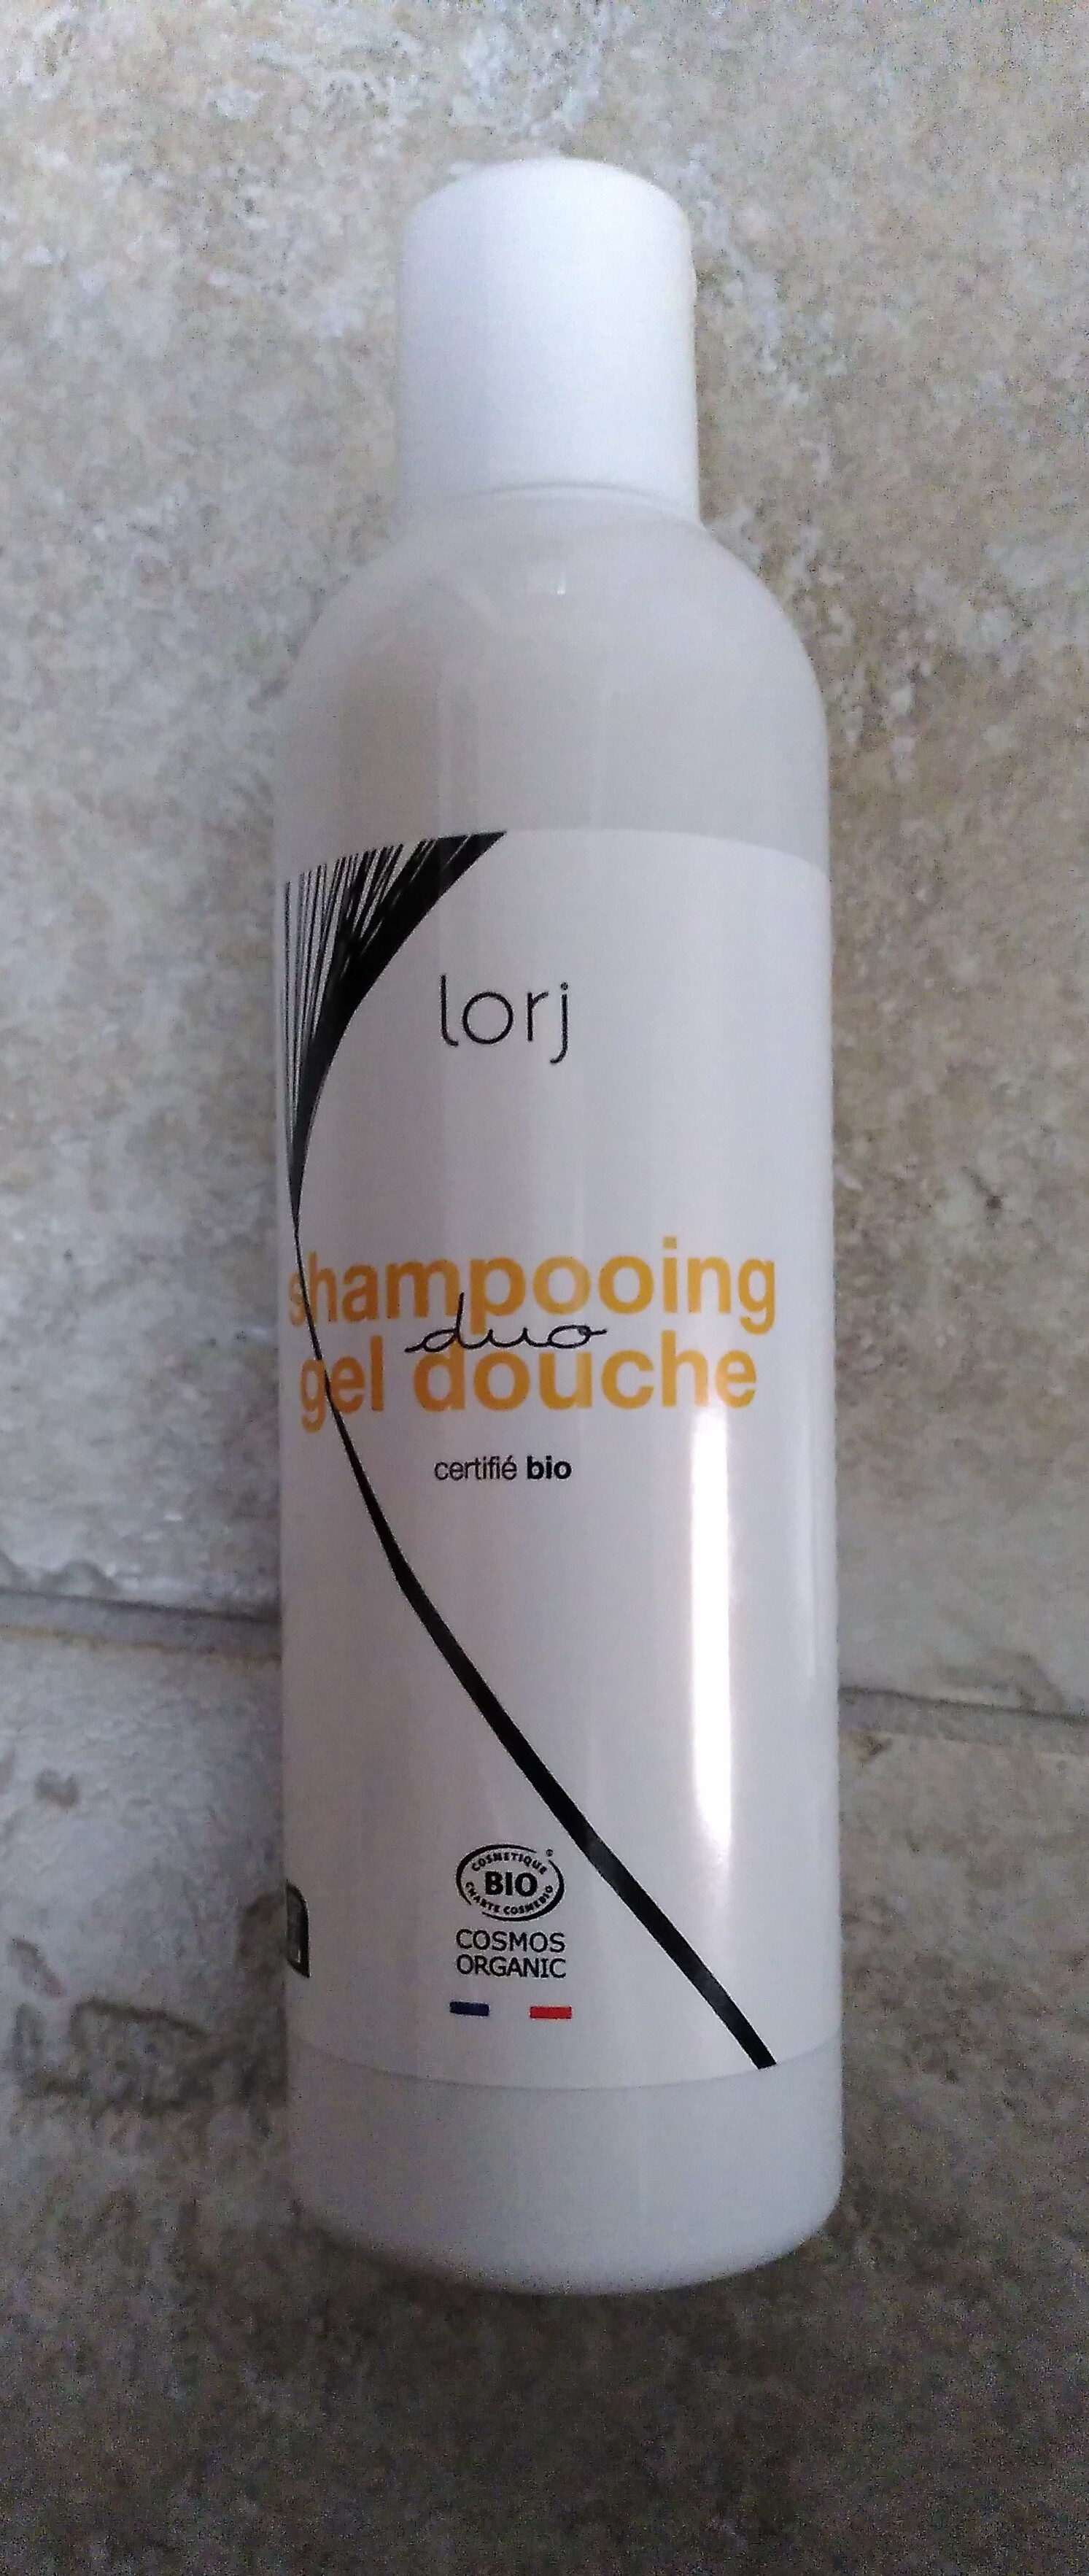 Duo shampoing gel douche - Produkt - fr